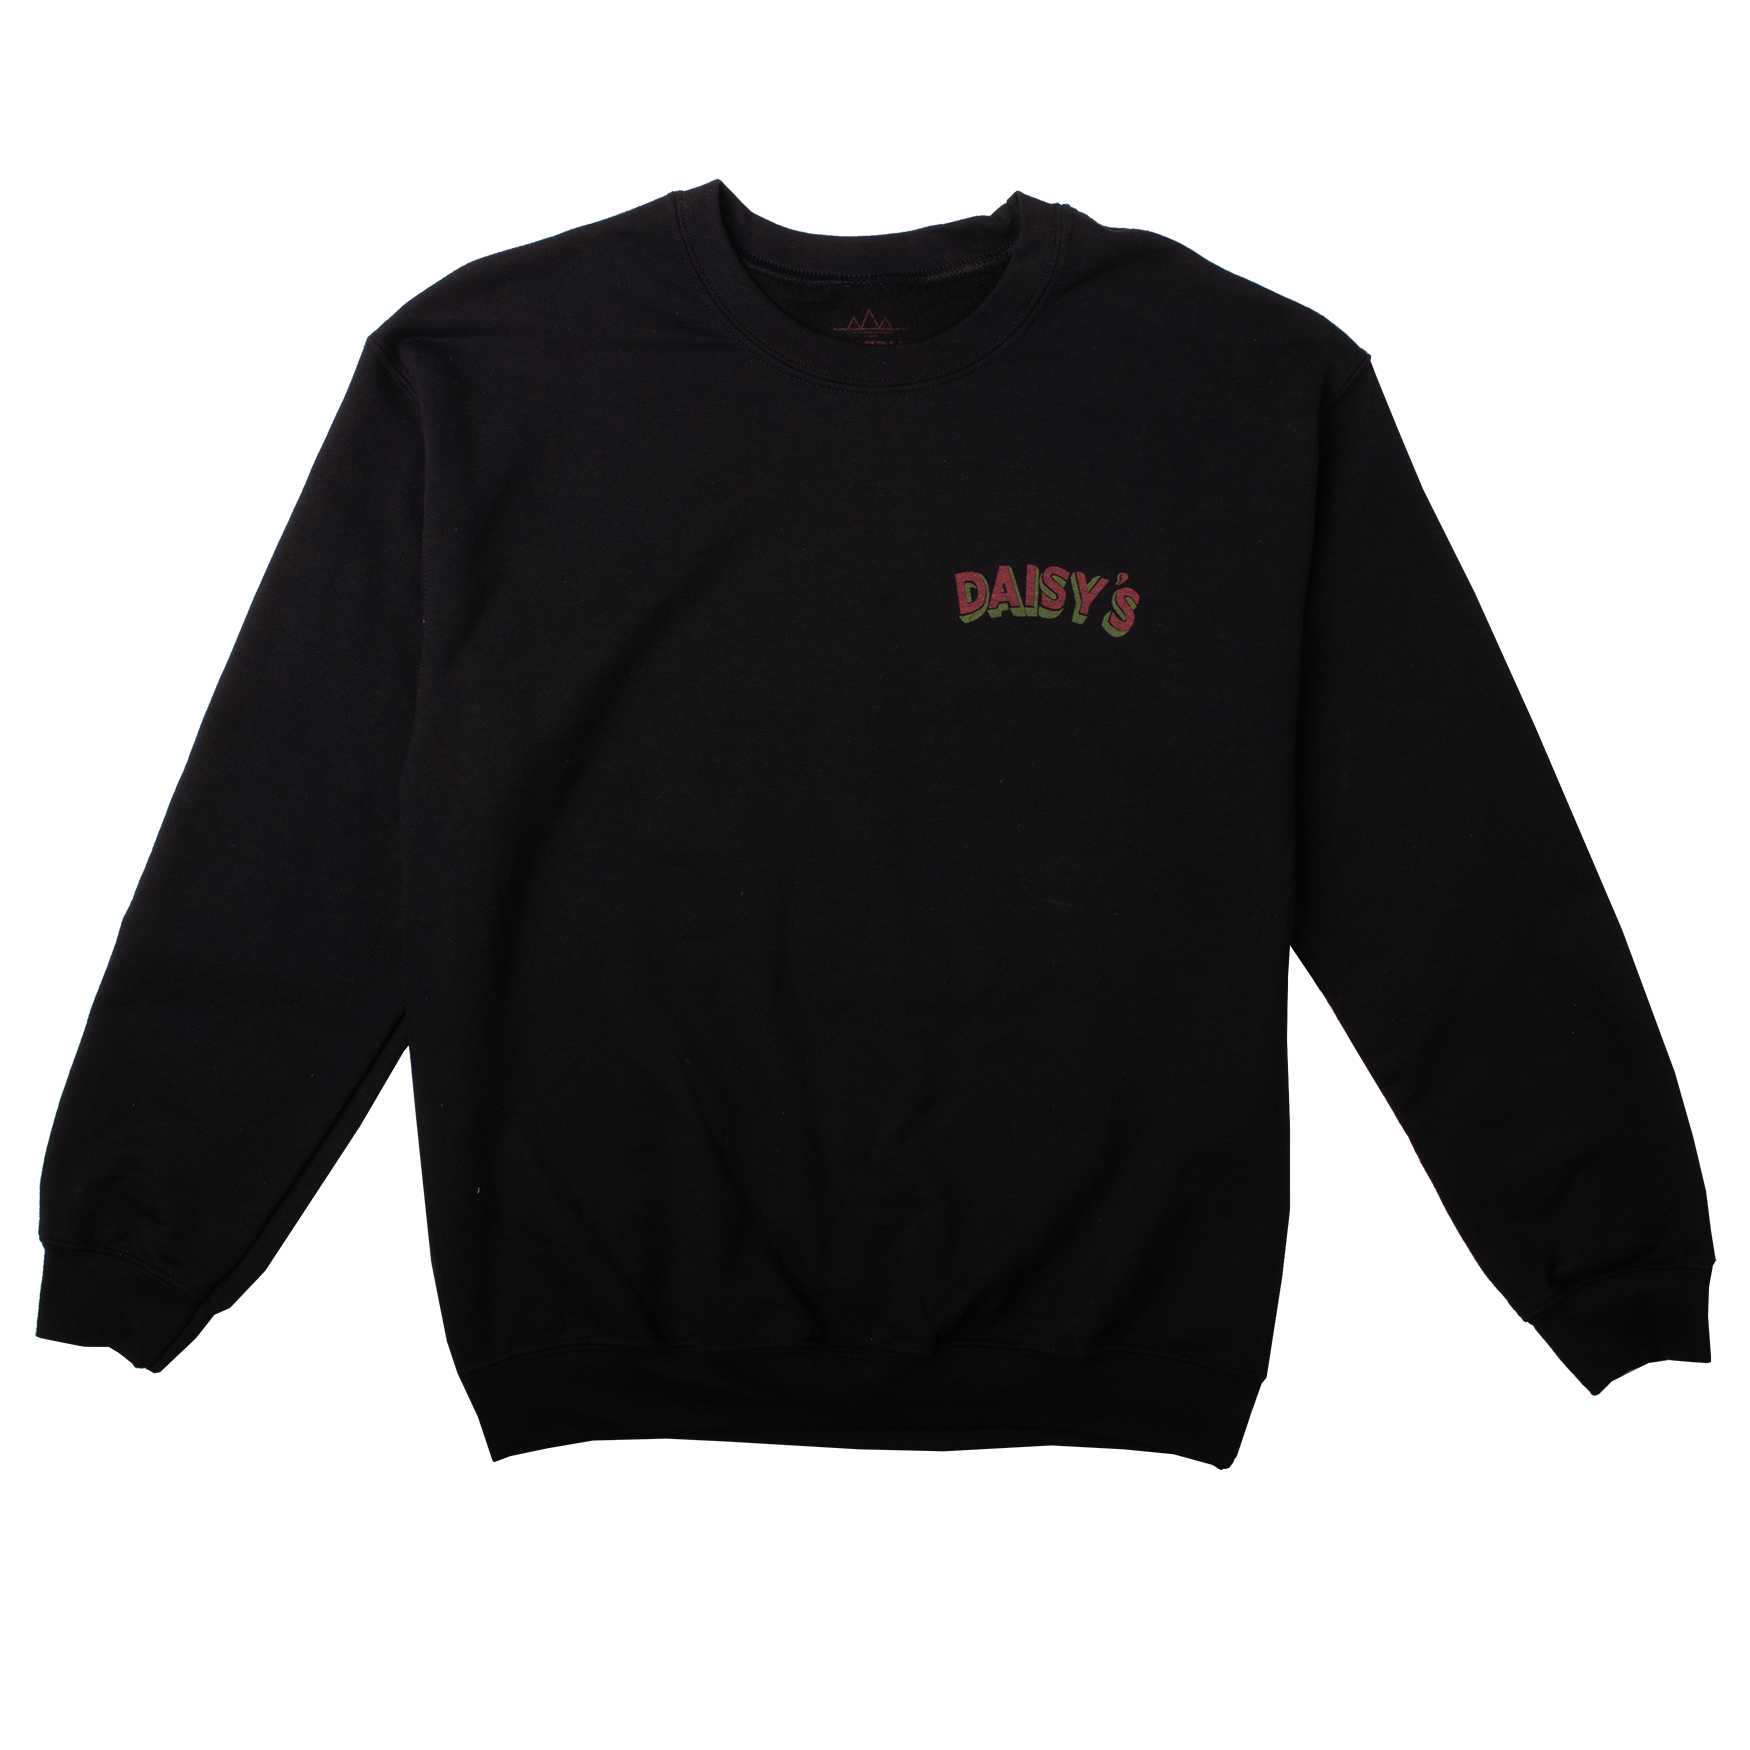 Daisy's Tomatoes sweatshirt